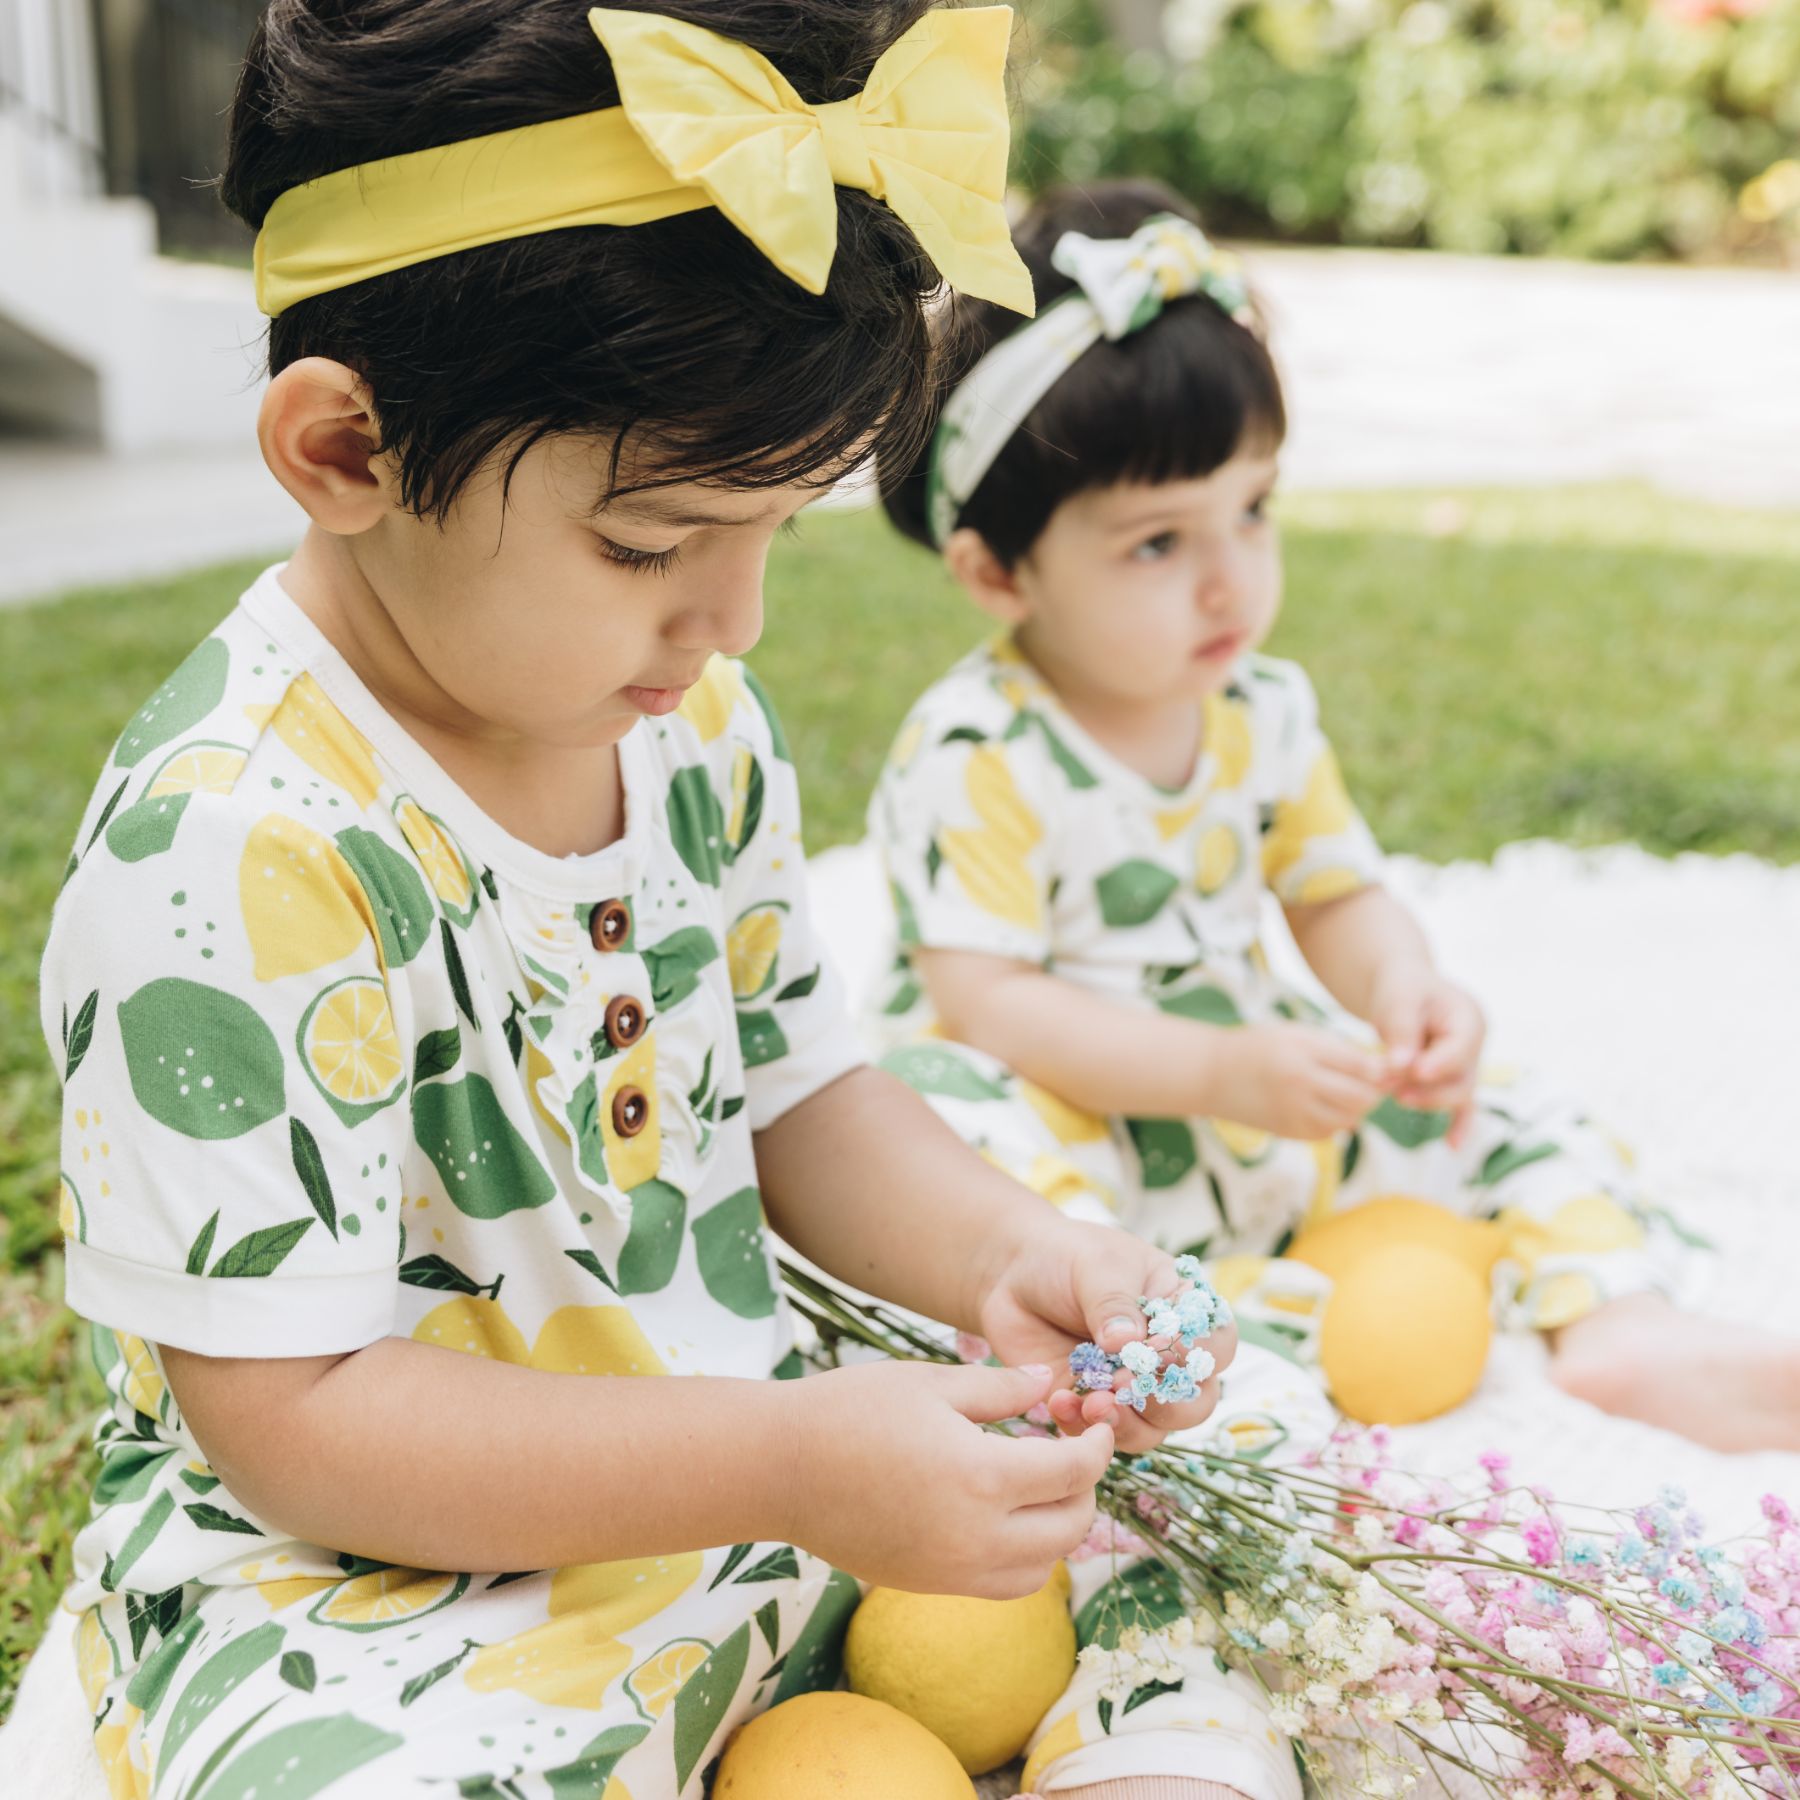 Lemon Angel PJ Set | kids Fashion | The Green Collective SG